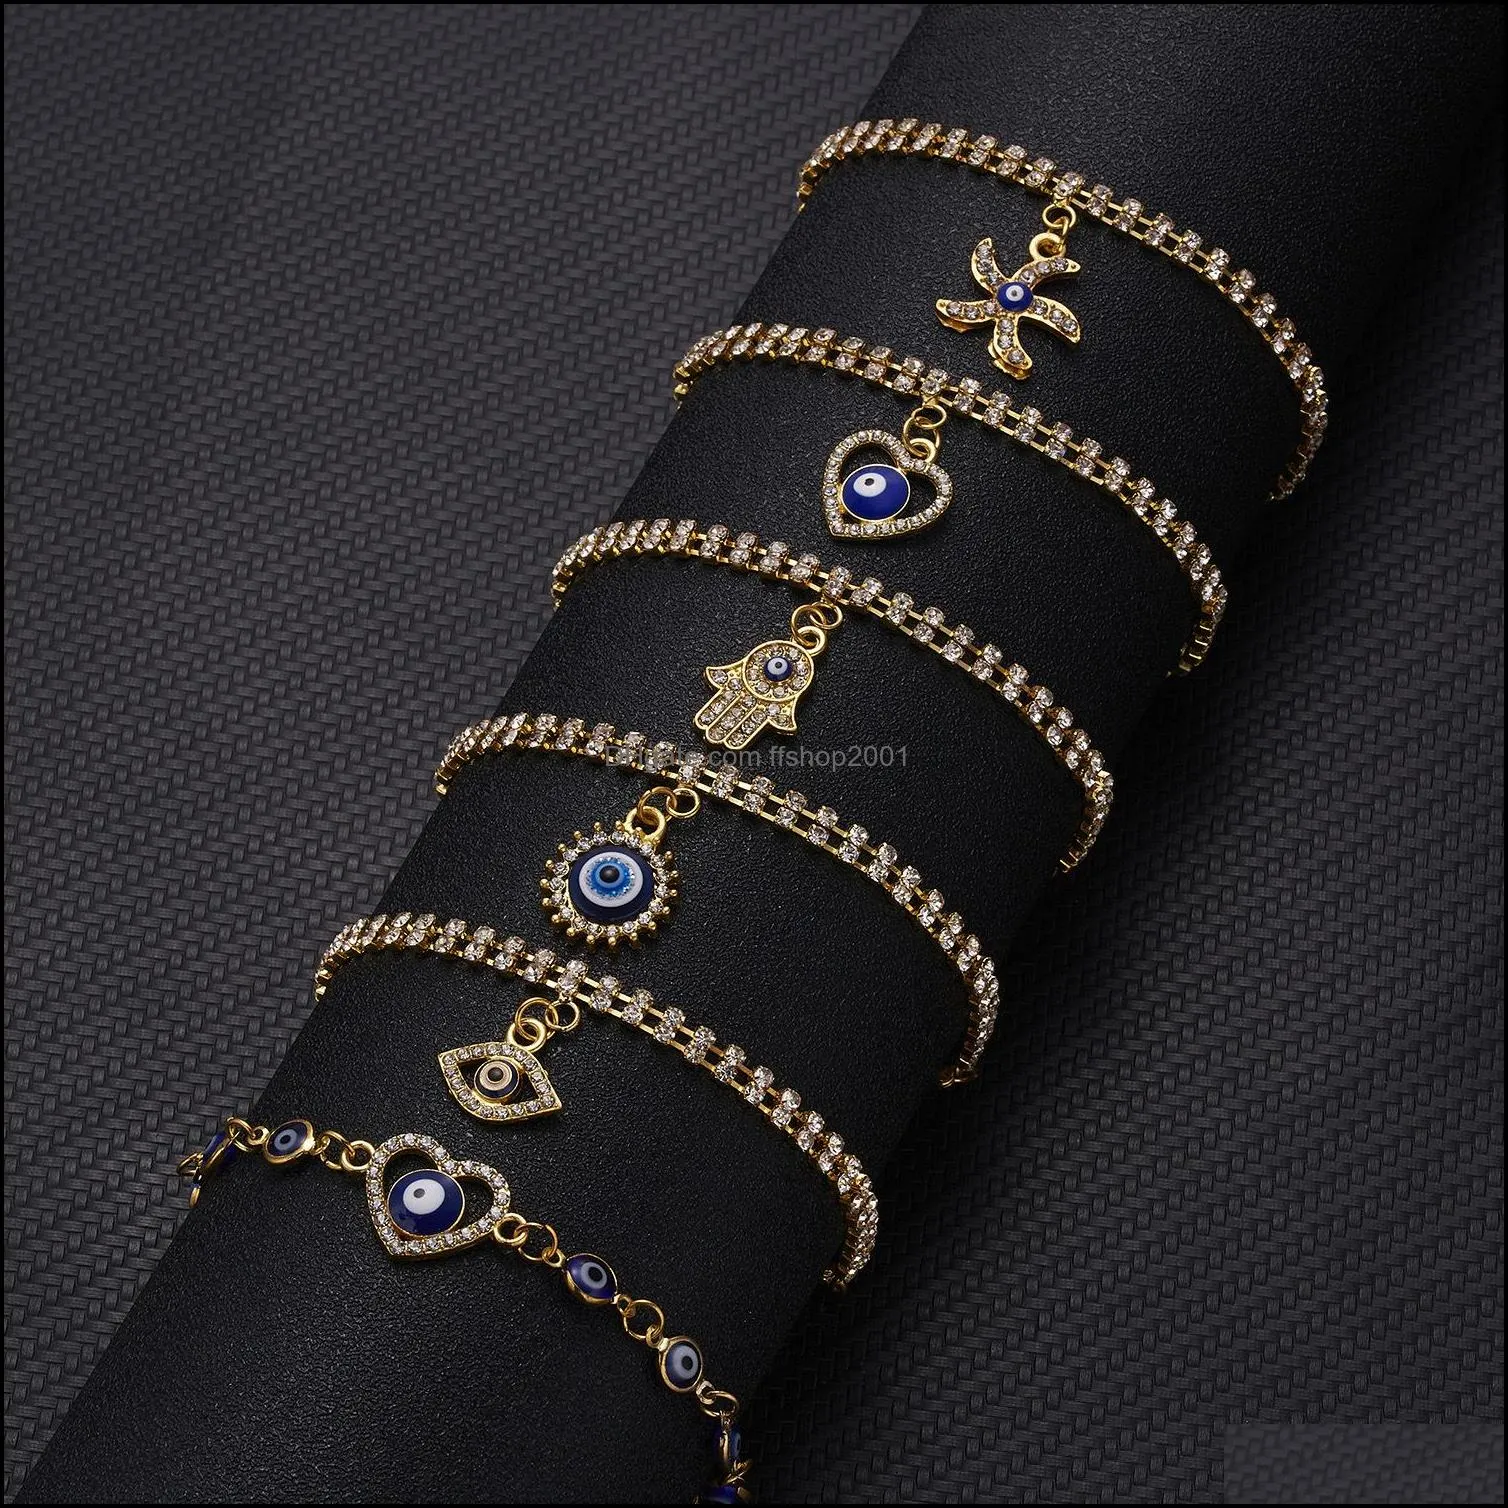  blue evil eye bracelets for women hand heart starfish charm crystal tennis chain bange female fashion party jewelry gift